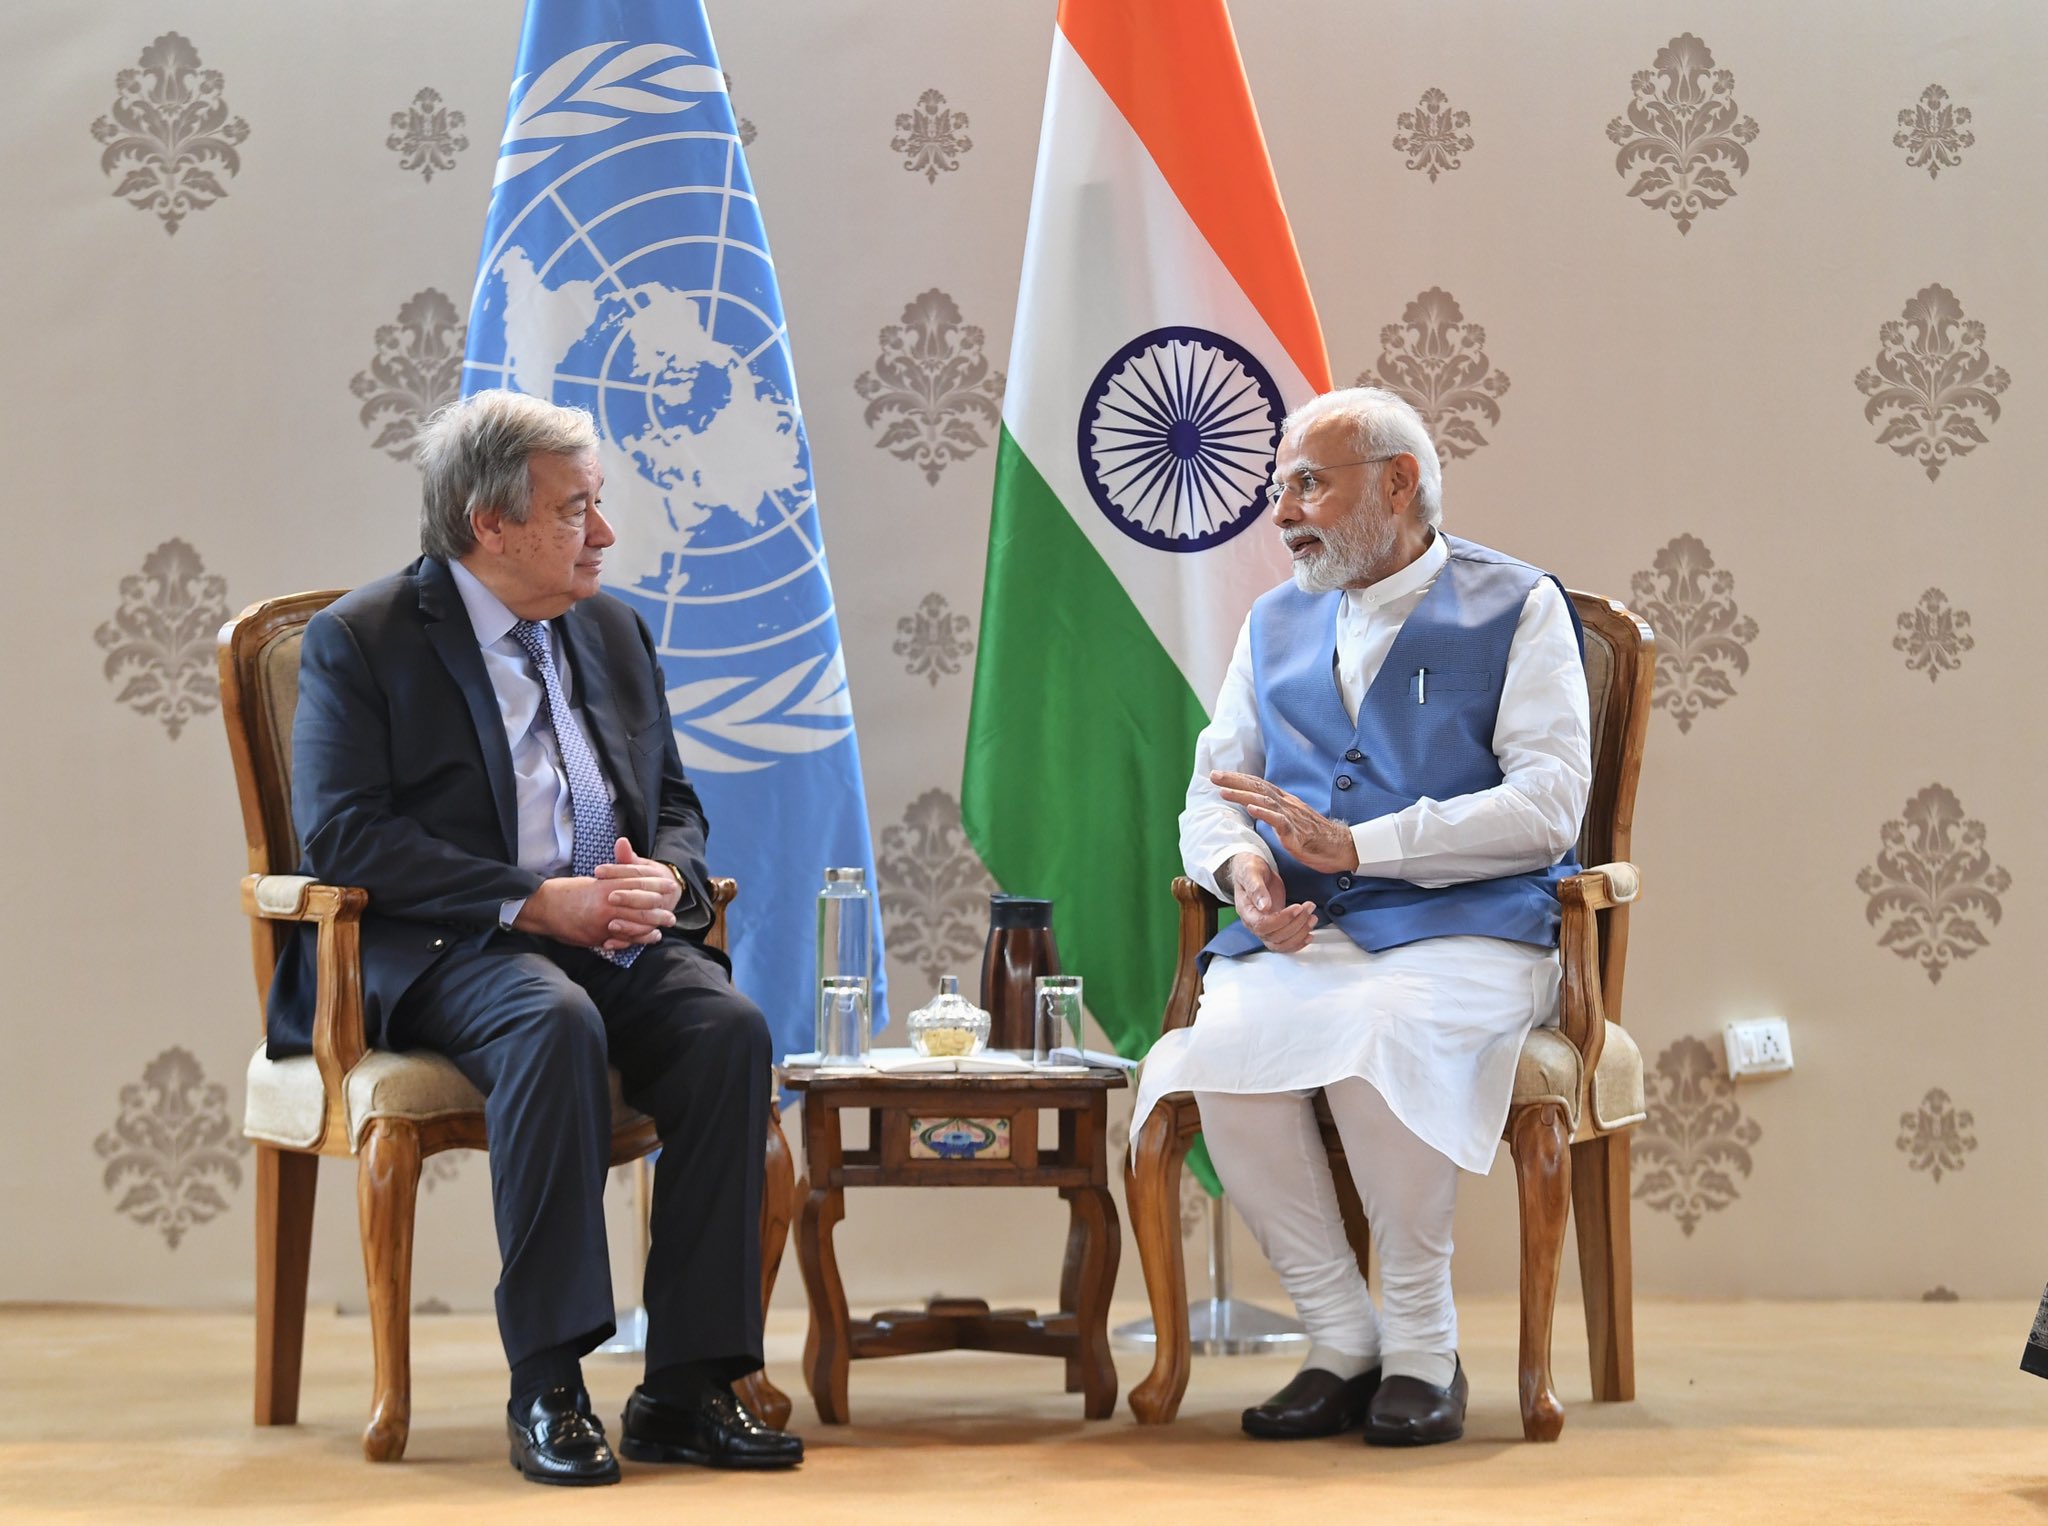 PM Modi & UN chief launch Mission LiFE to fight climate change, World leaders hail move